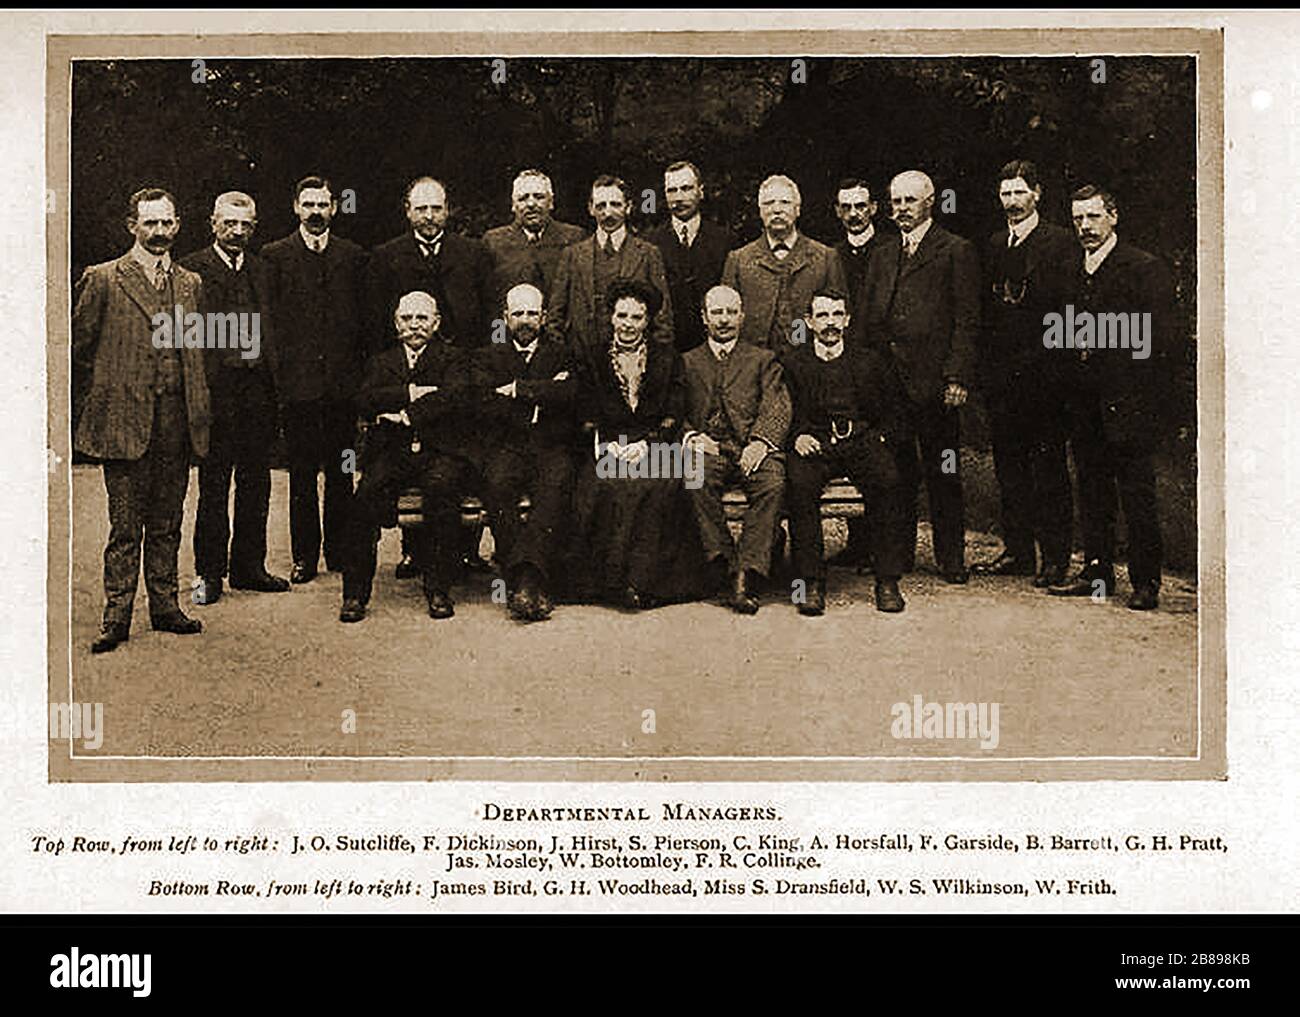 Huddersfield Industrial Society. Una prima fotografia storica dei responsabili di reparto. Sutcliffe, Dickinson, Hirst, Pierson, Re, Horsfall, Garside, Barrett, Pratt, James Mosley, Bottomley, Collingee. Foto Stock